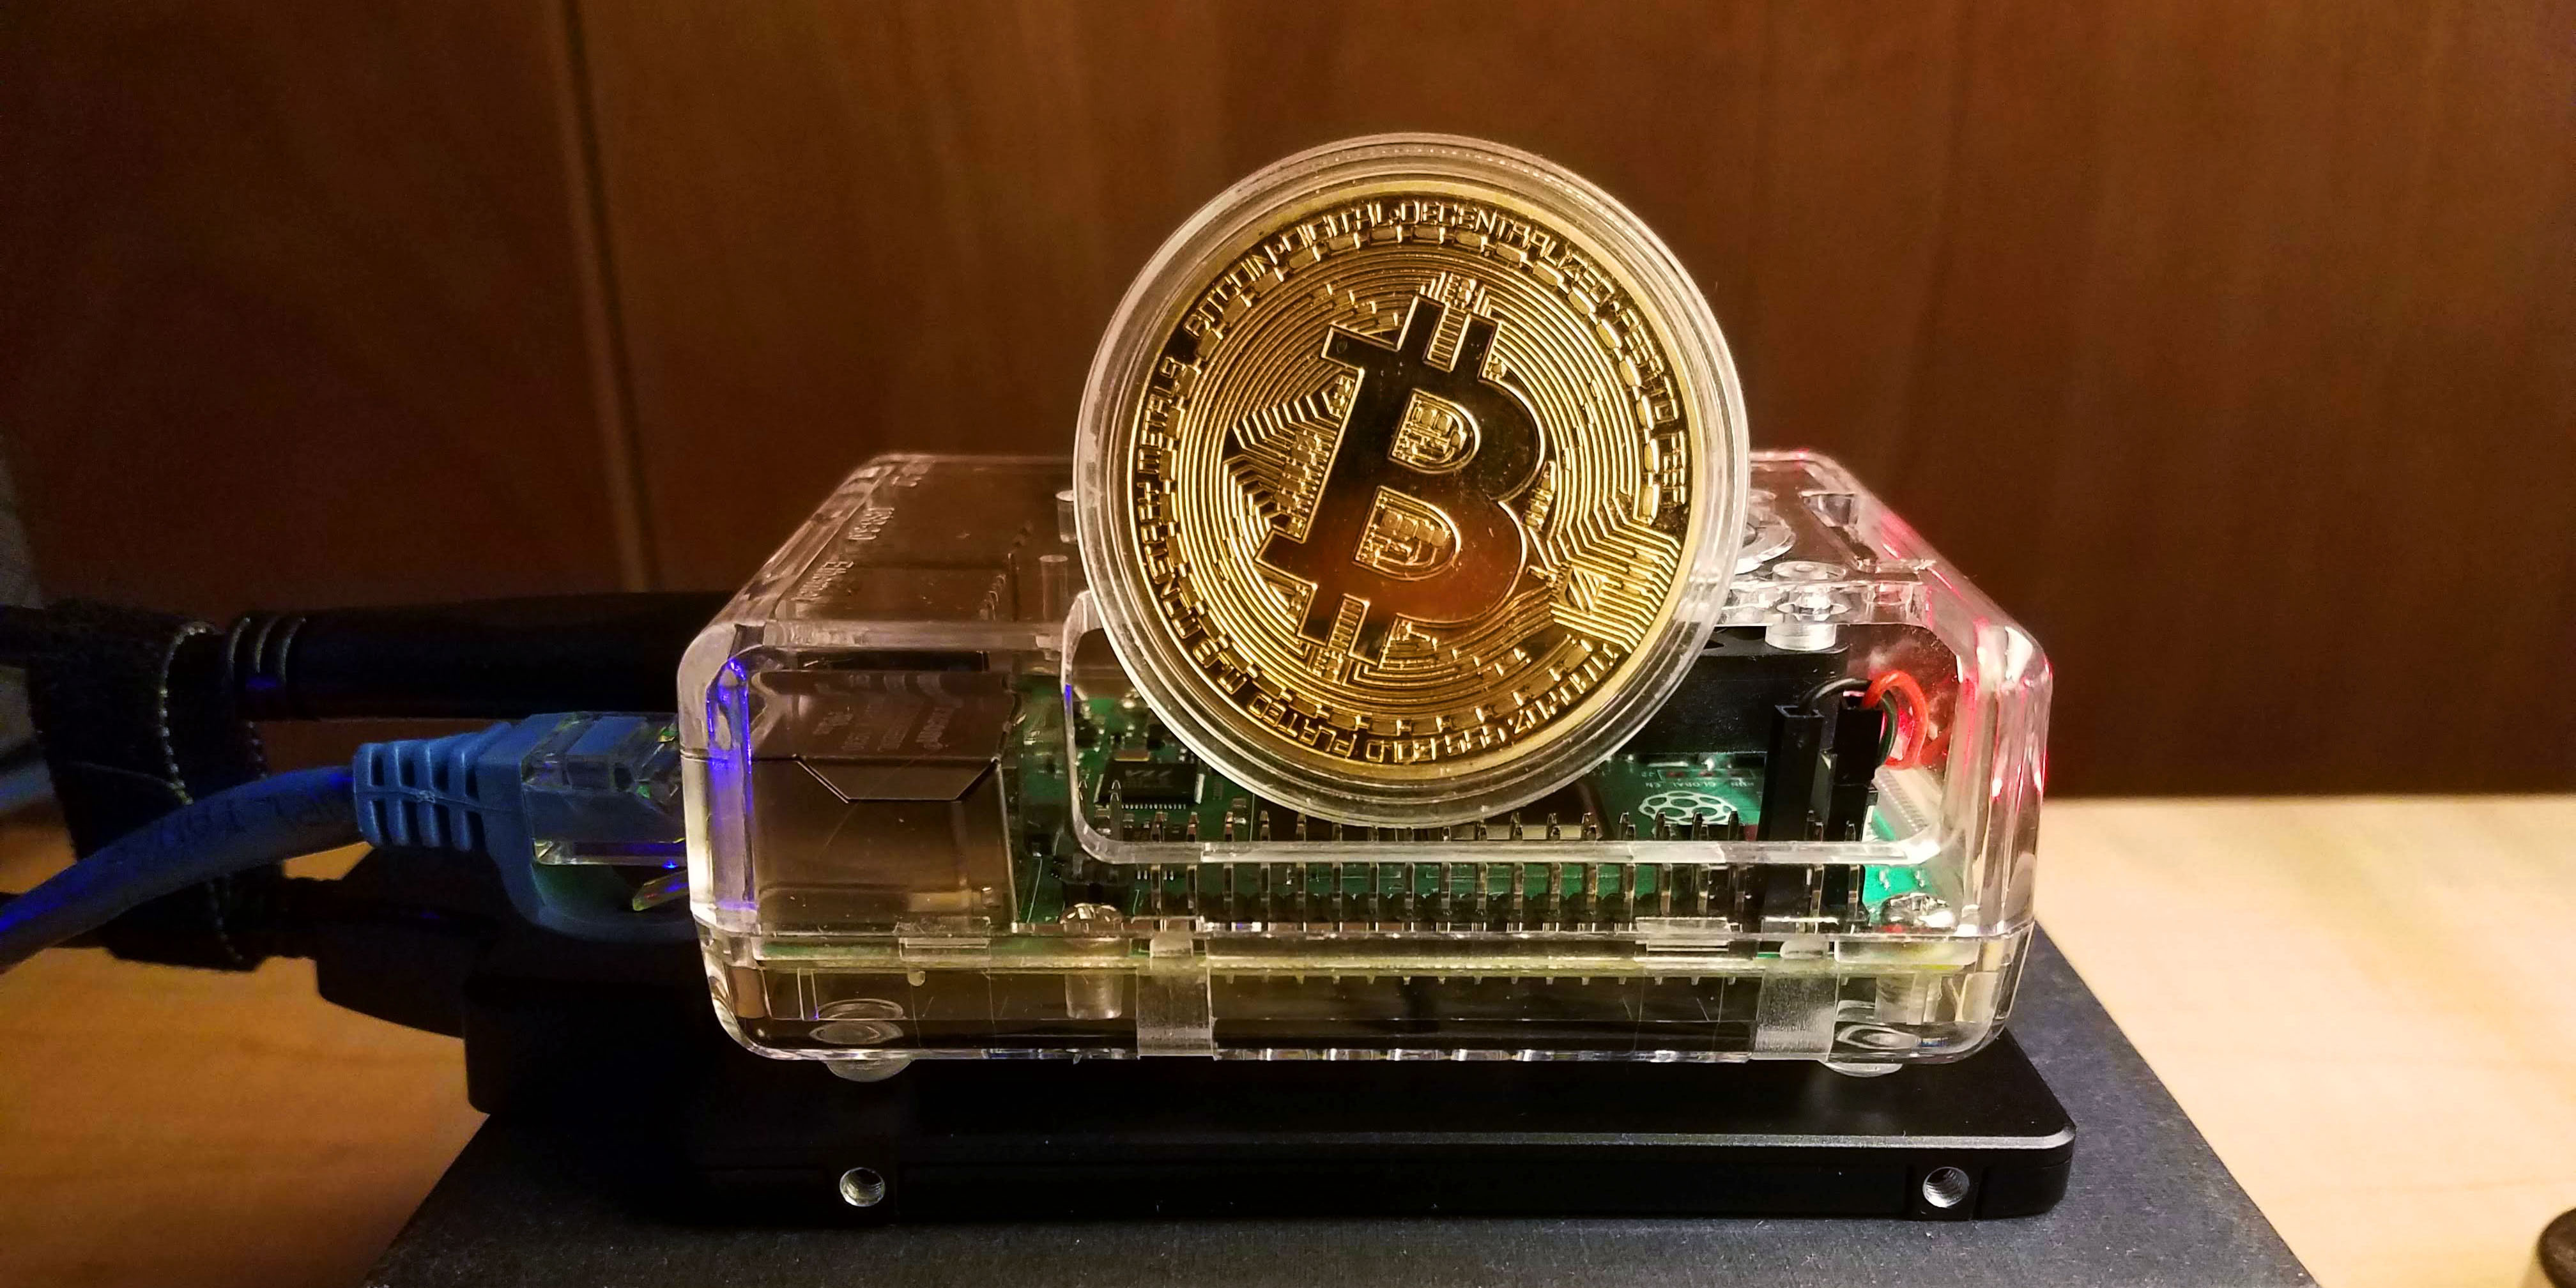 An image of a small computer (Raspberry Pi) running a Bitcoin Node.